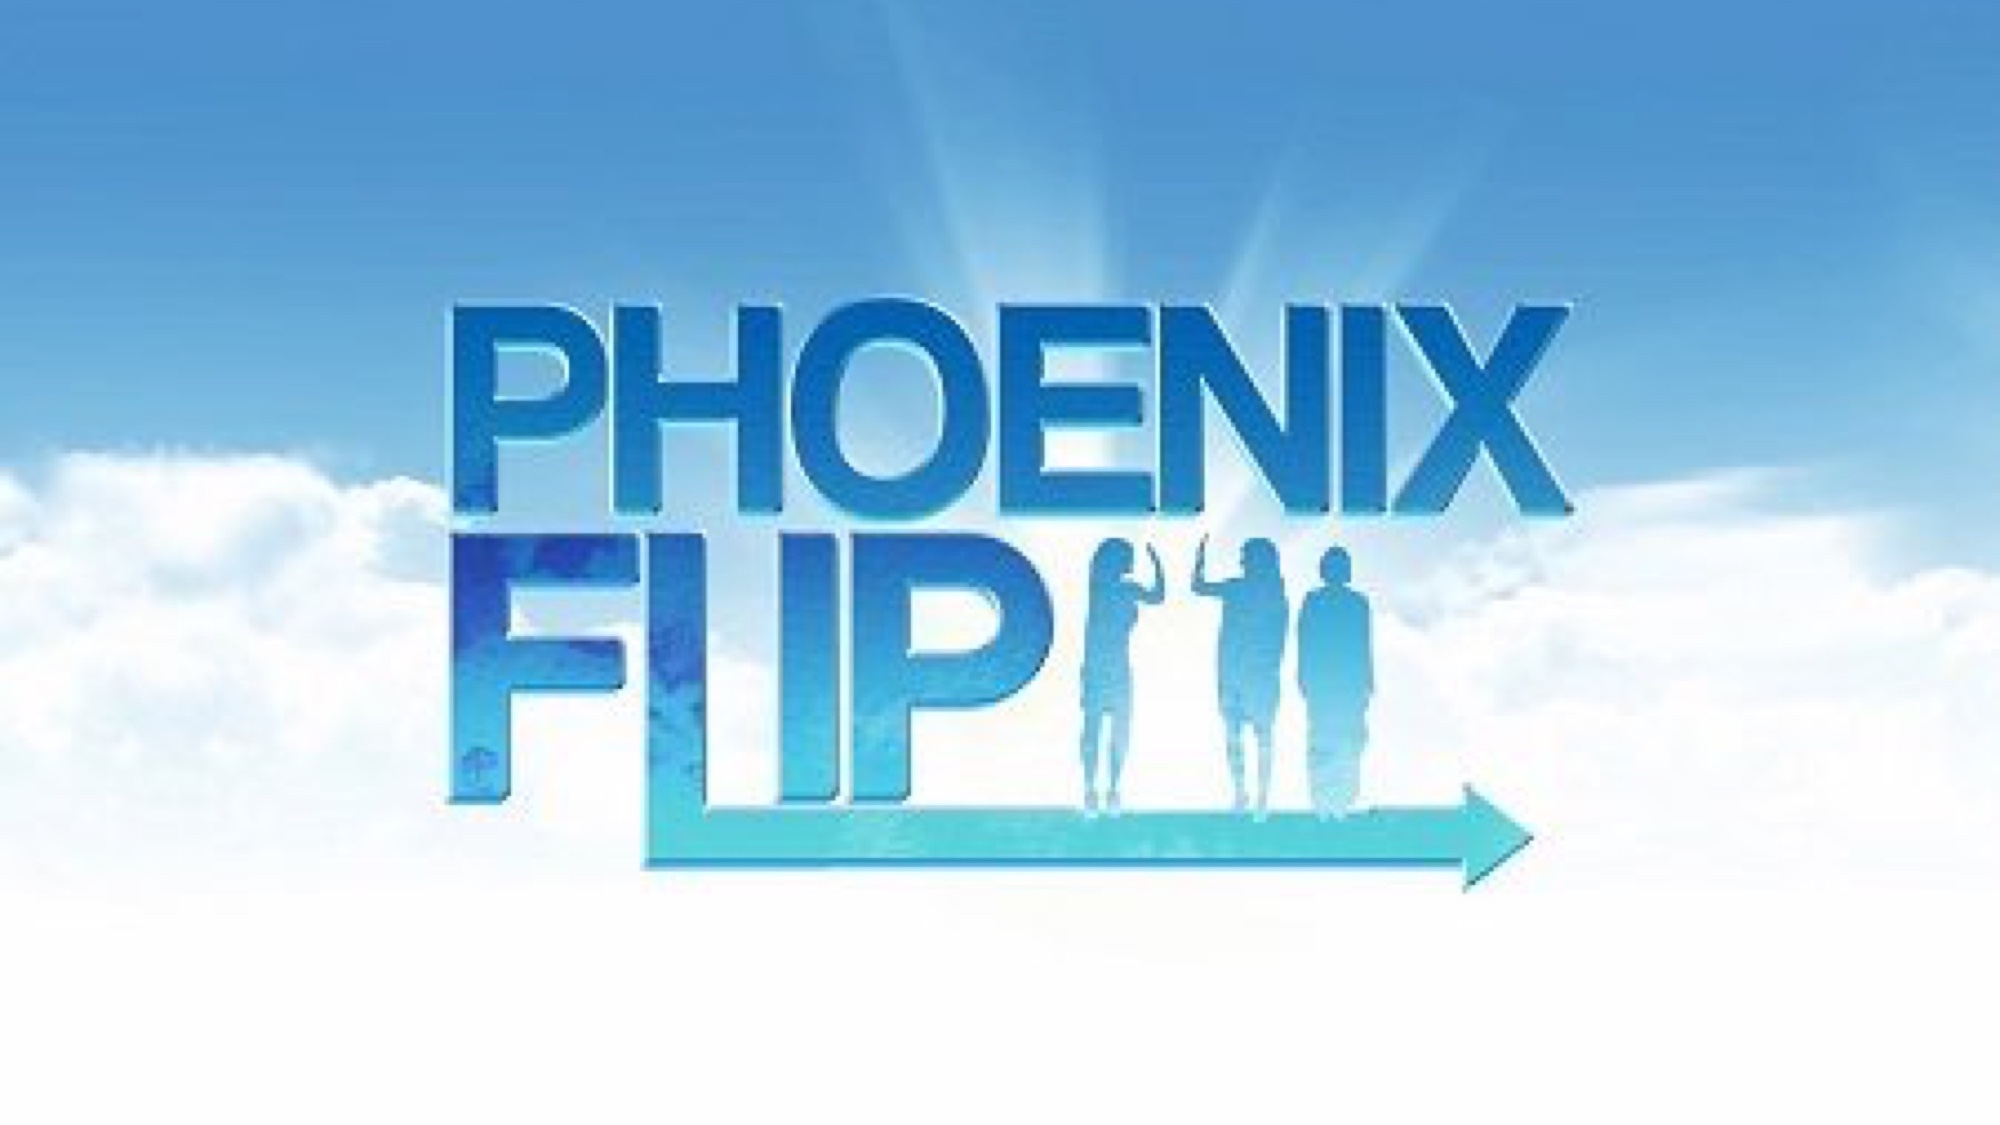 Phoenix Flip